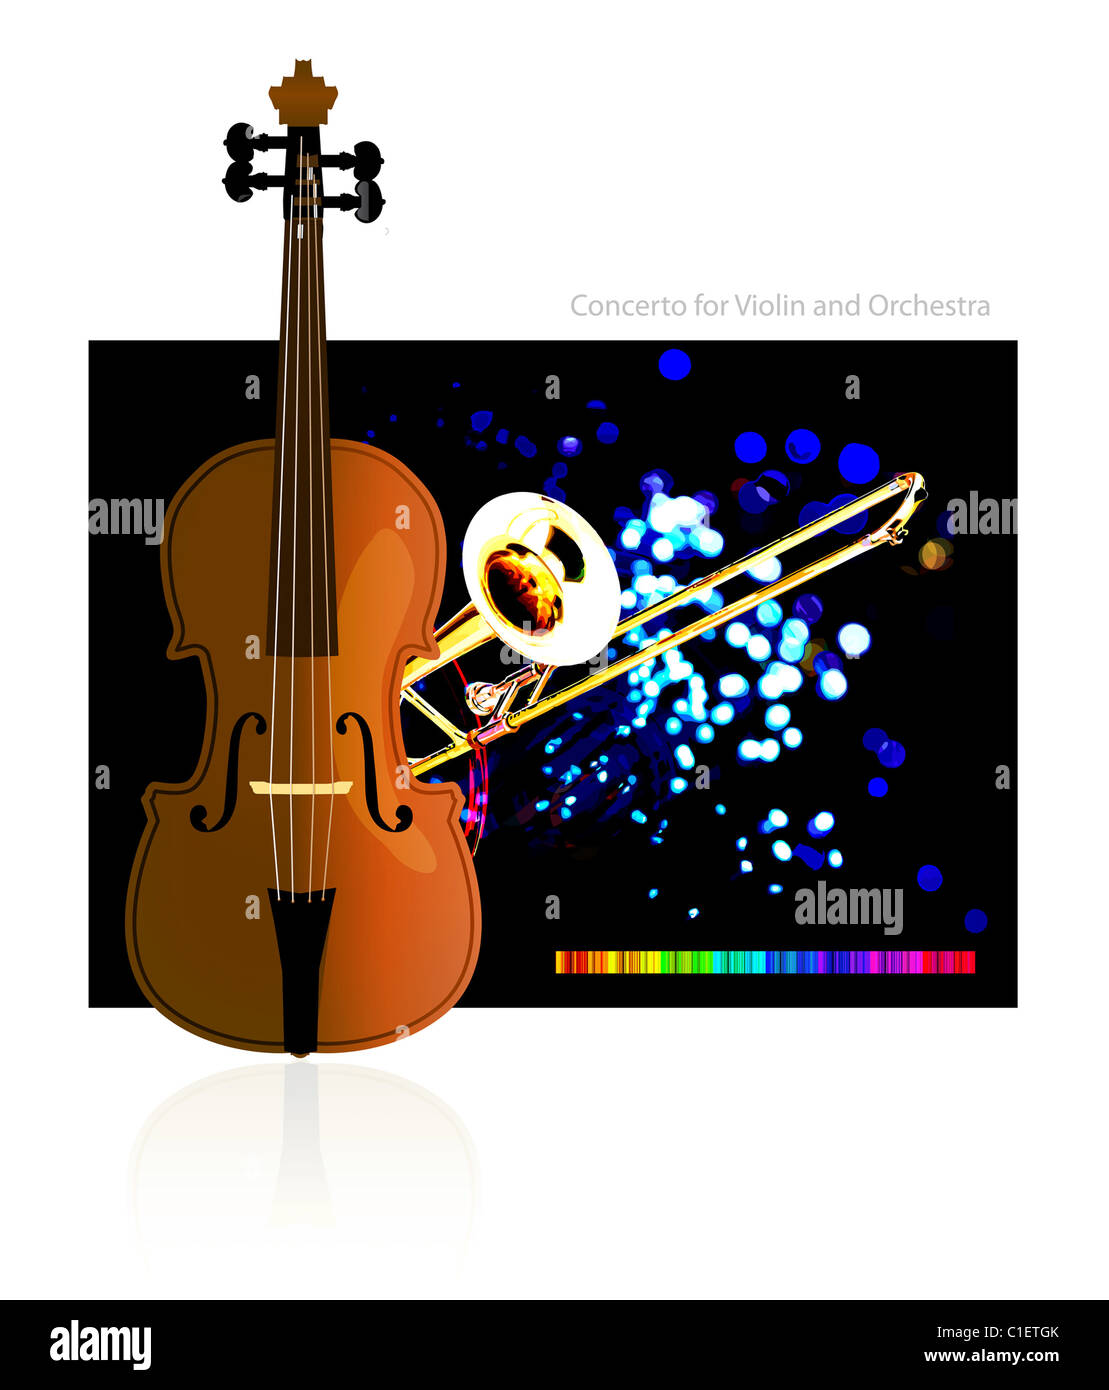 Concerto for Violin and Orchestra Stock Photo